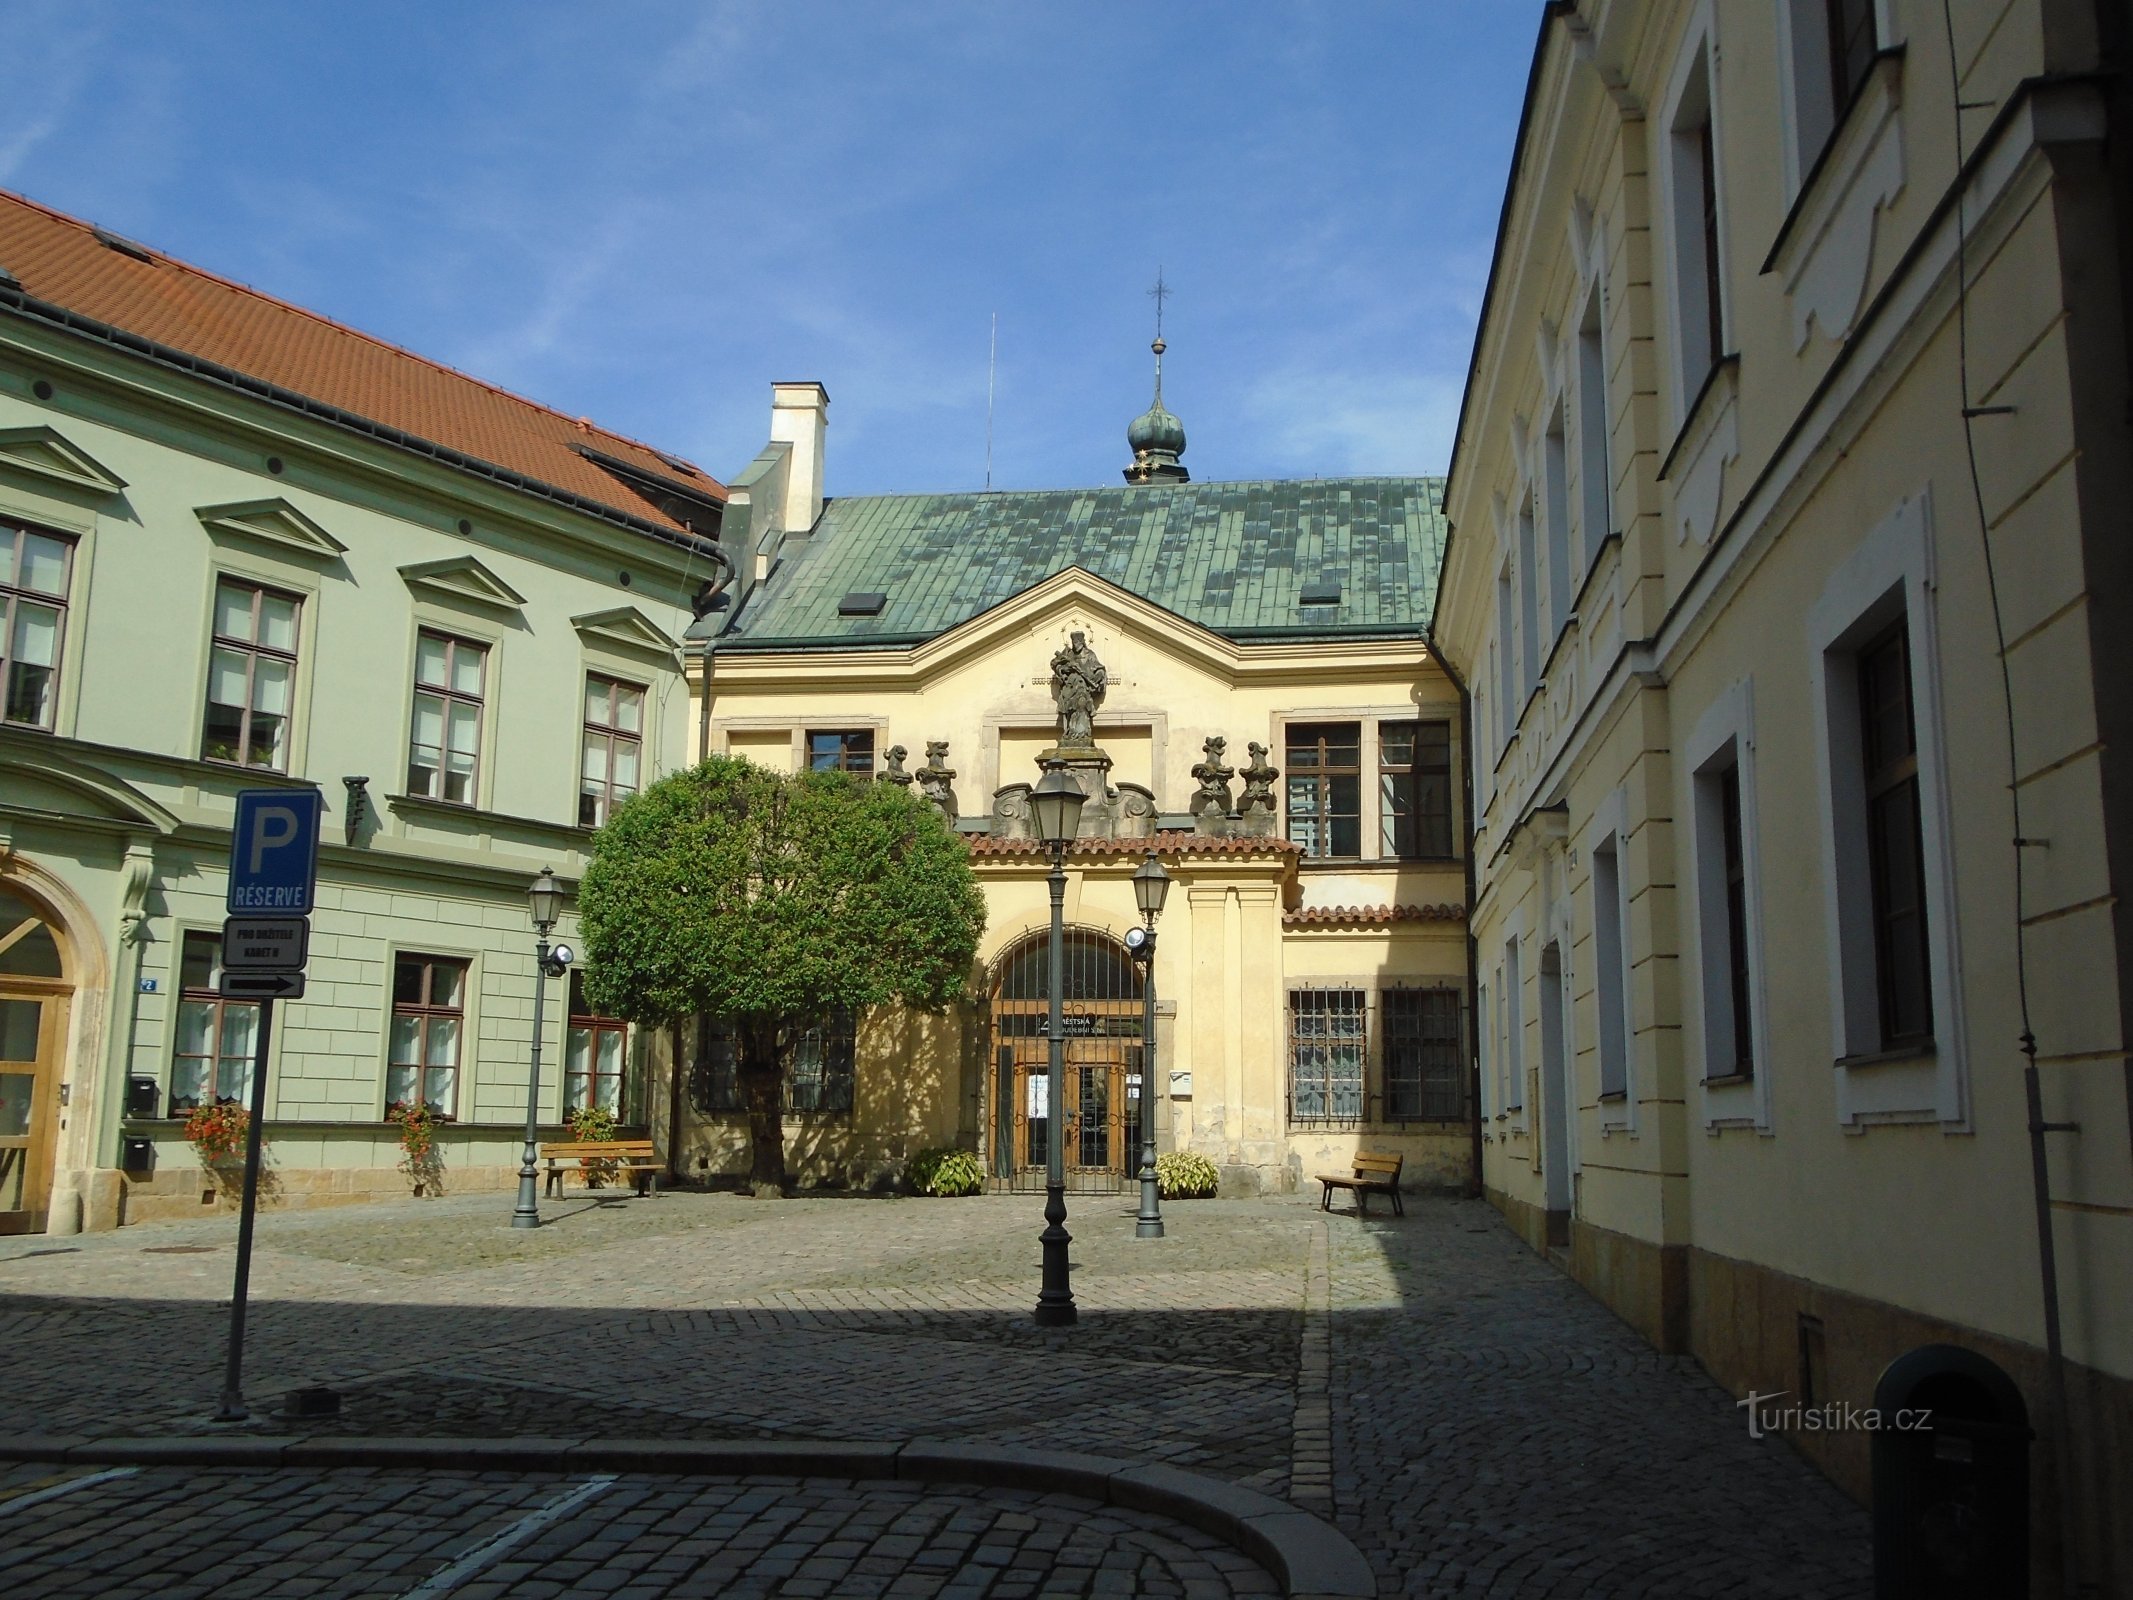 At the Castle No. 91 (Hradec Králové, 16.9.2018 October XNUMX)